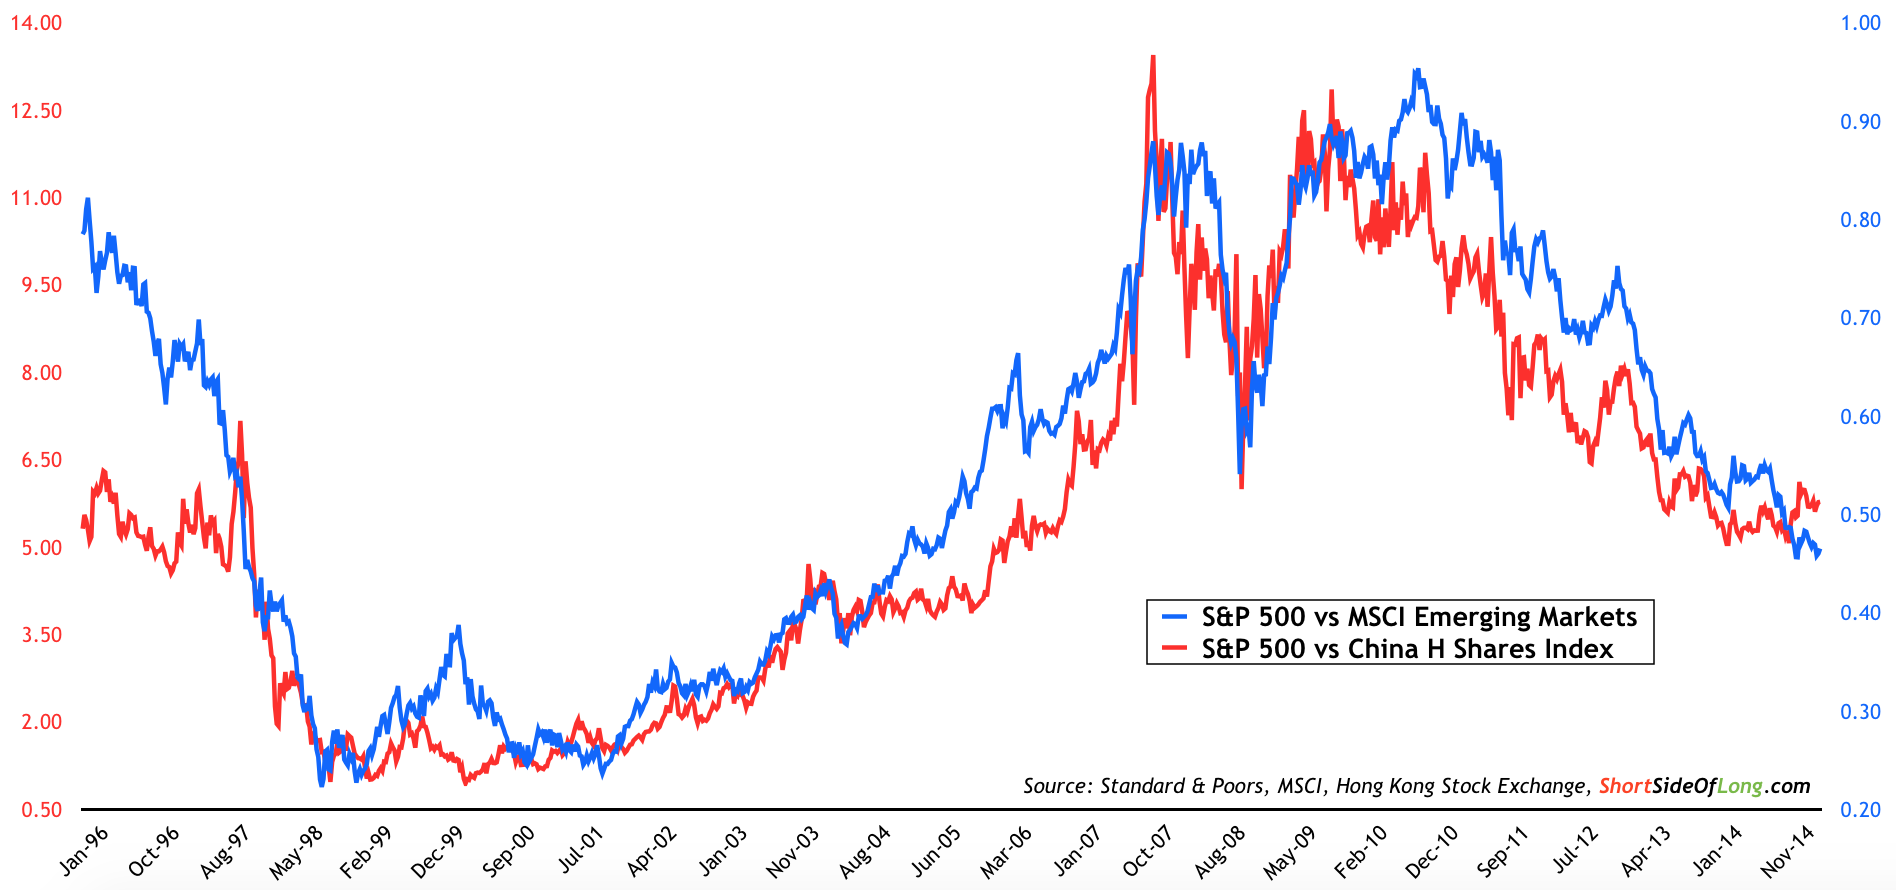 S&P 500 vs MSCI EM: vs China H Shares 1996-2015